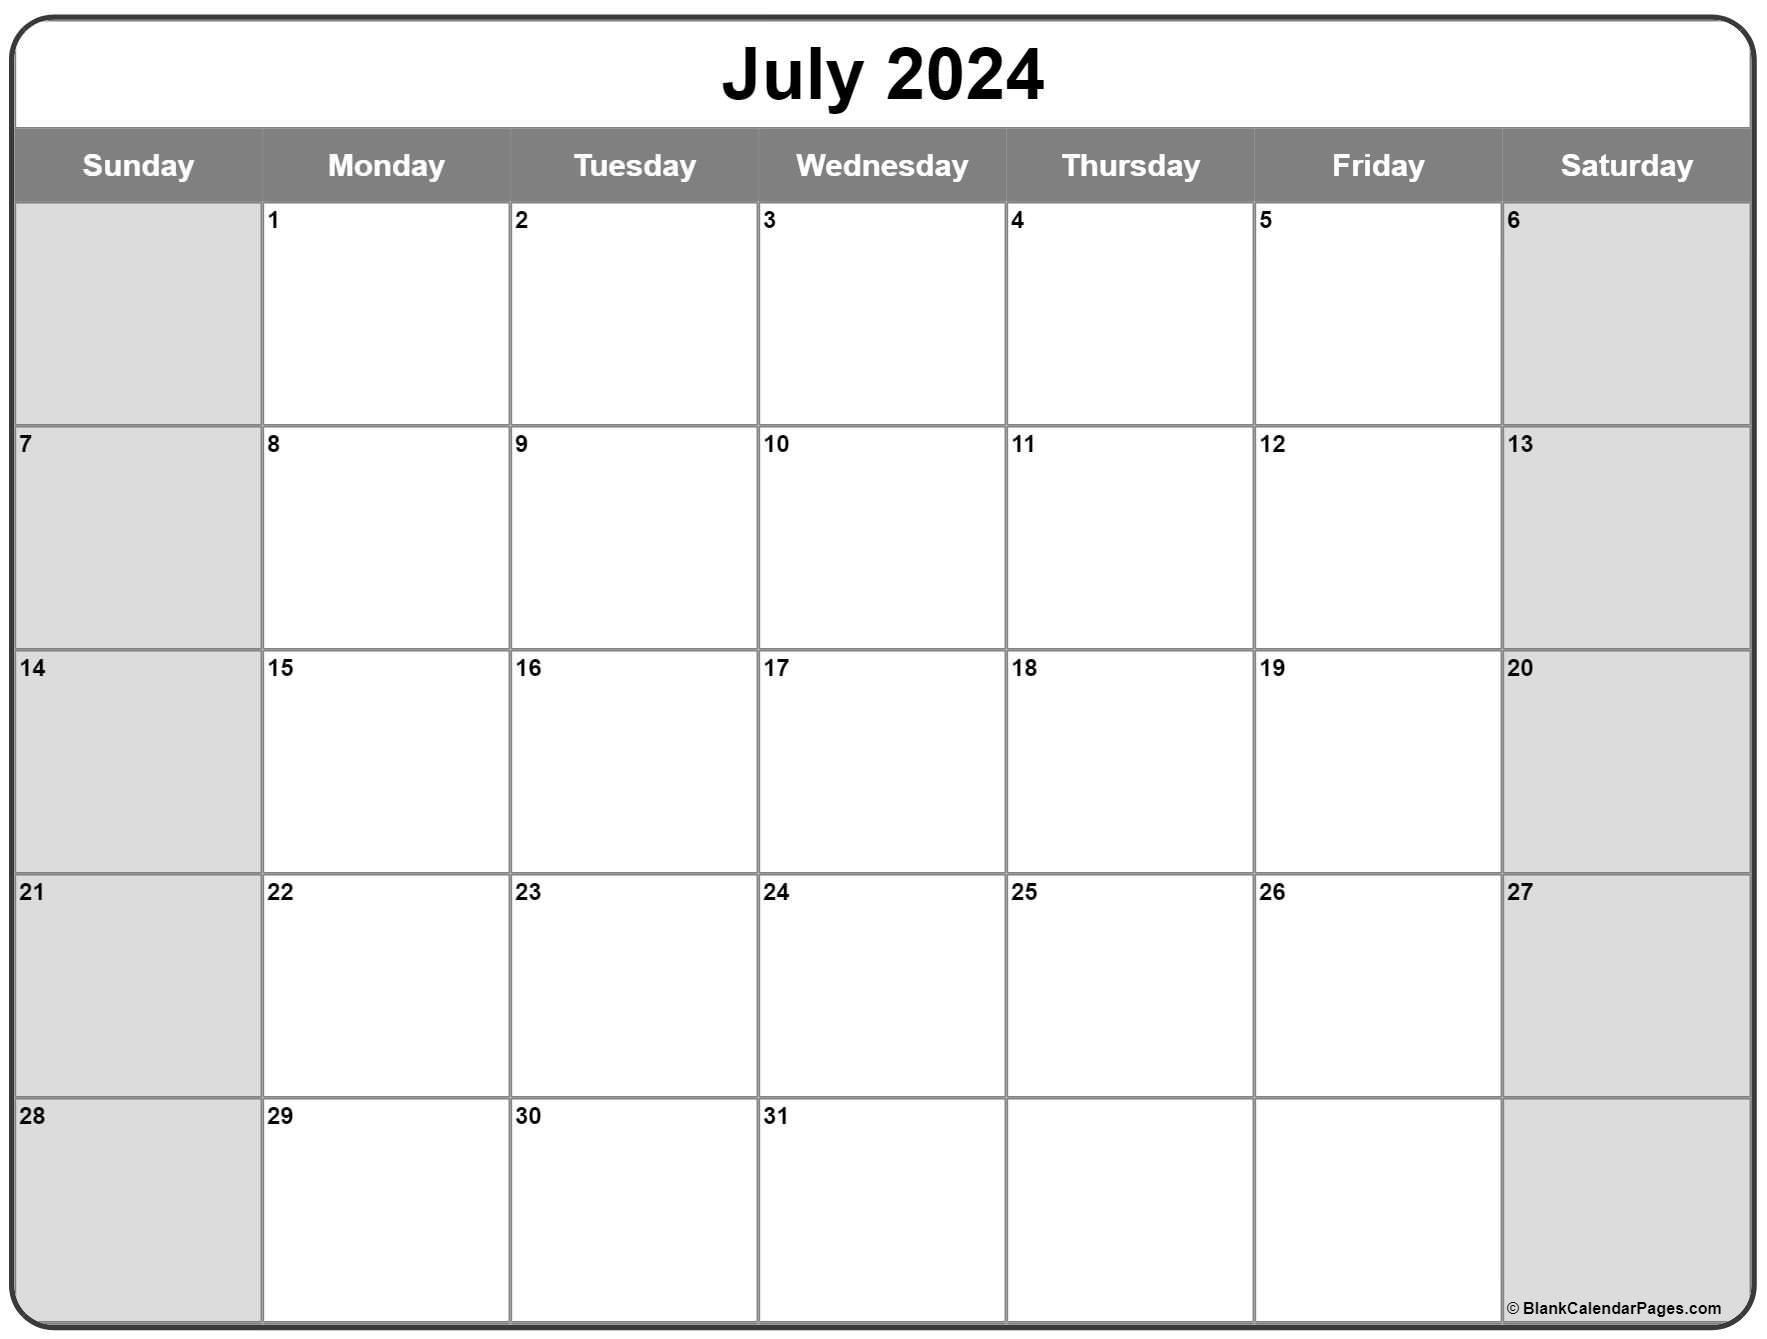 July 2023 Calendar Free Printable Calendar July 2023 Calendar Free Printable Calendar 2023 5095